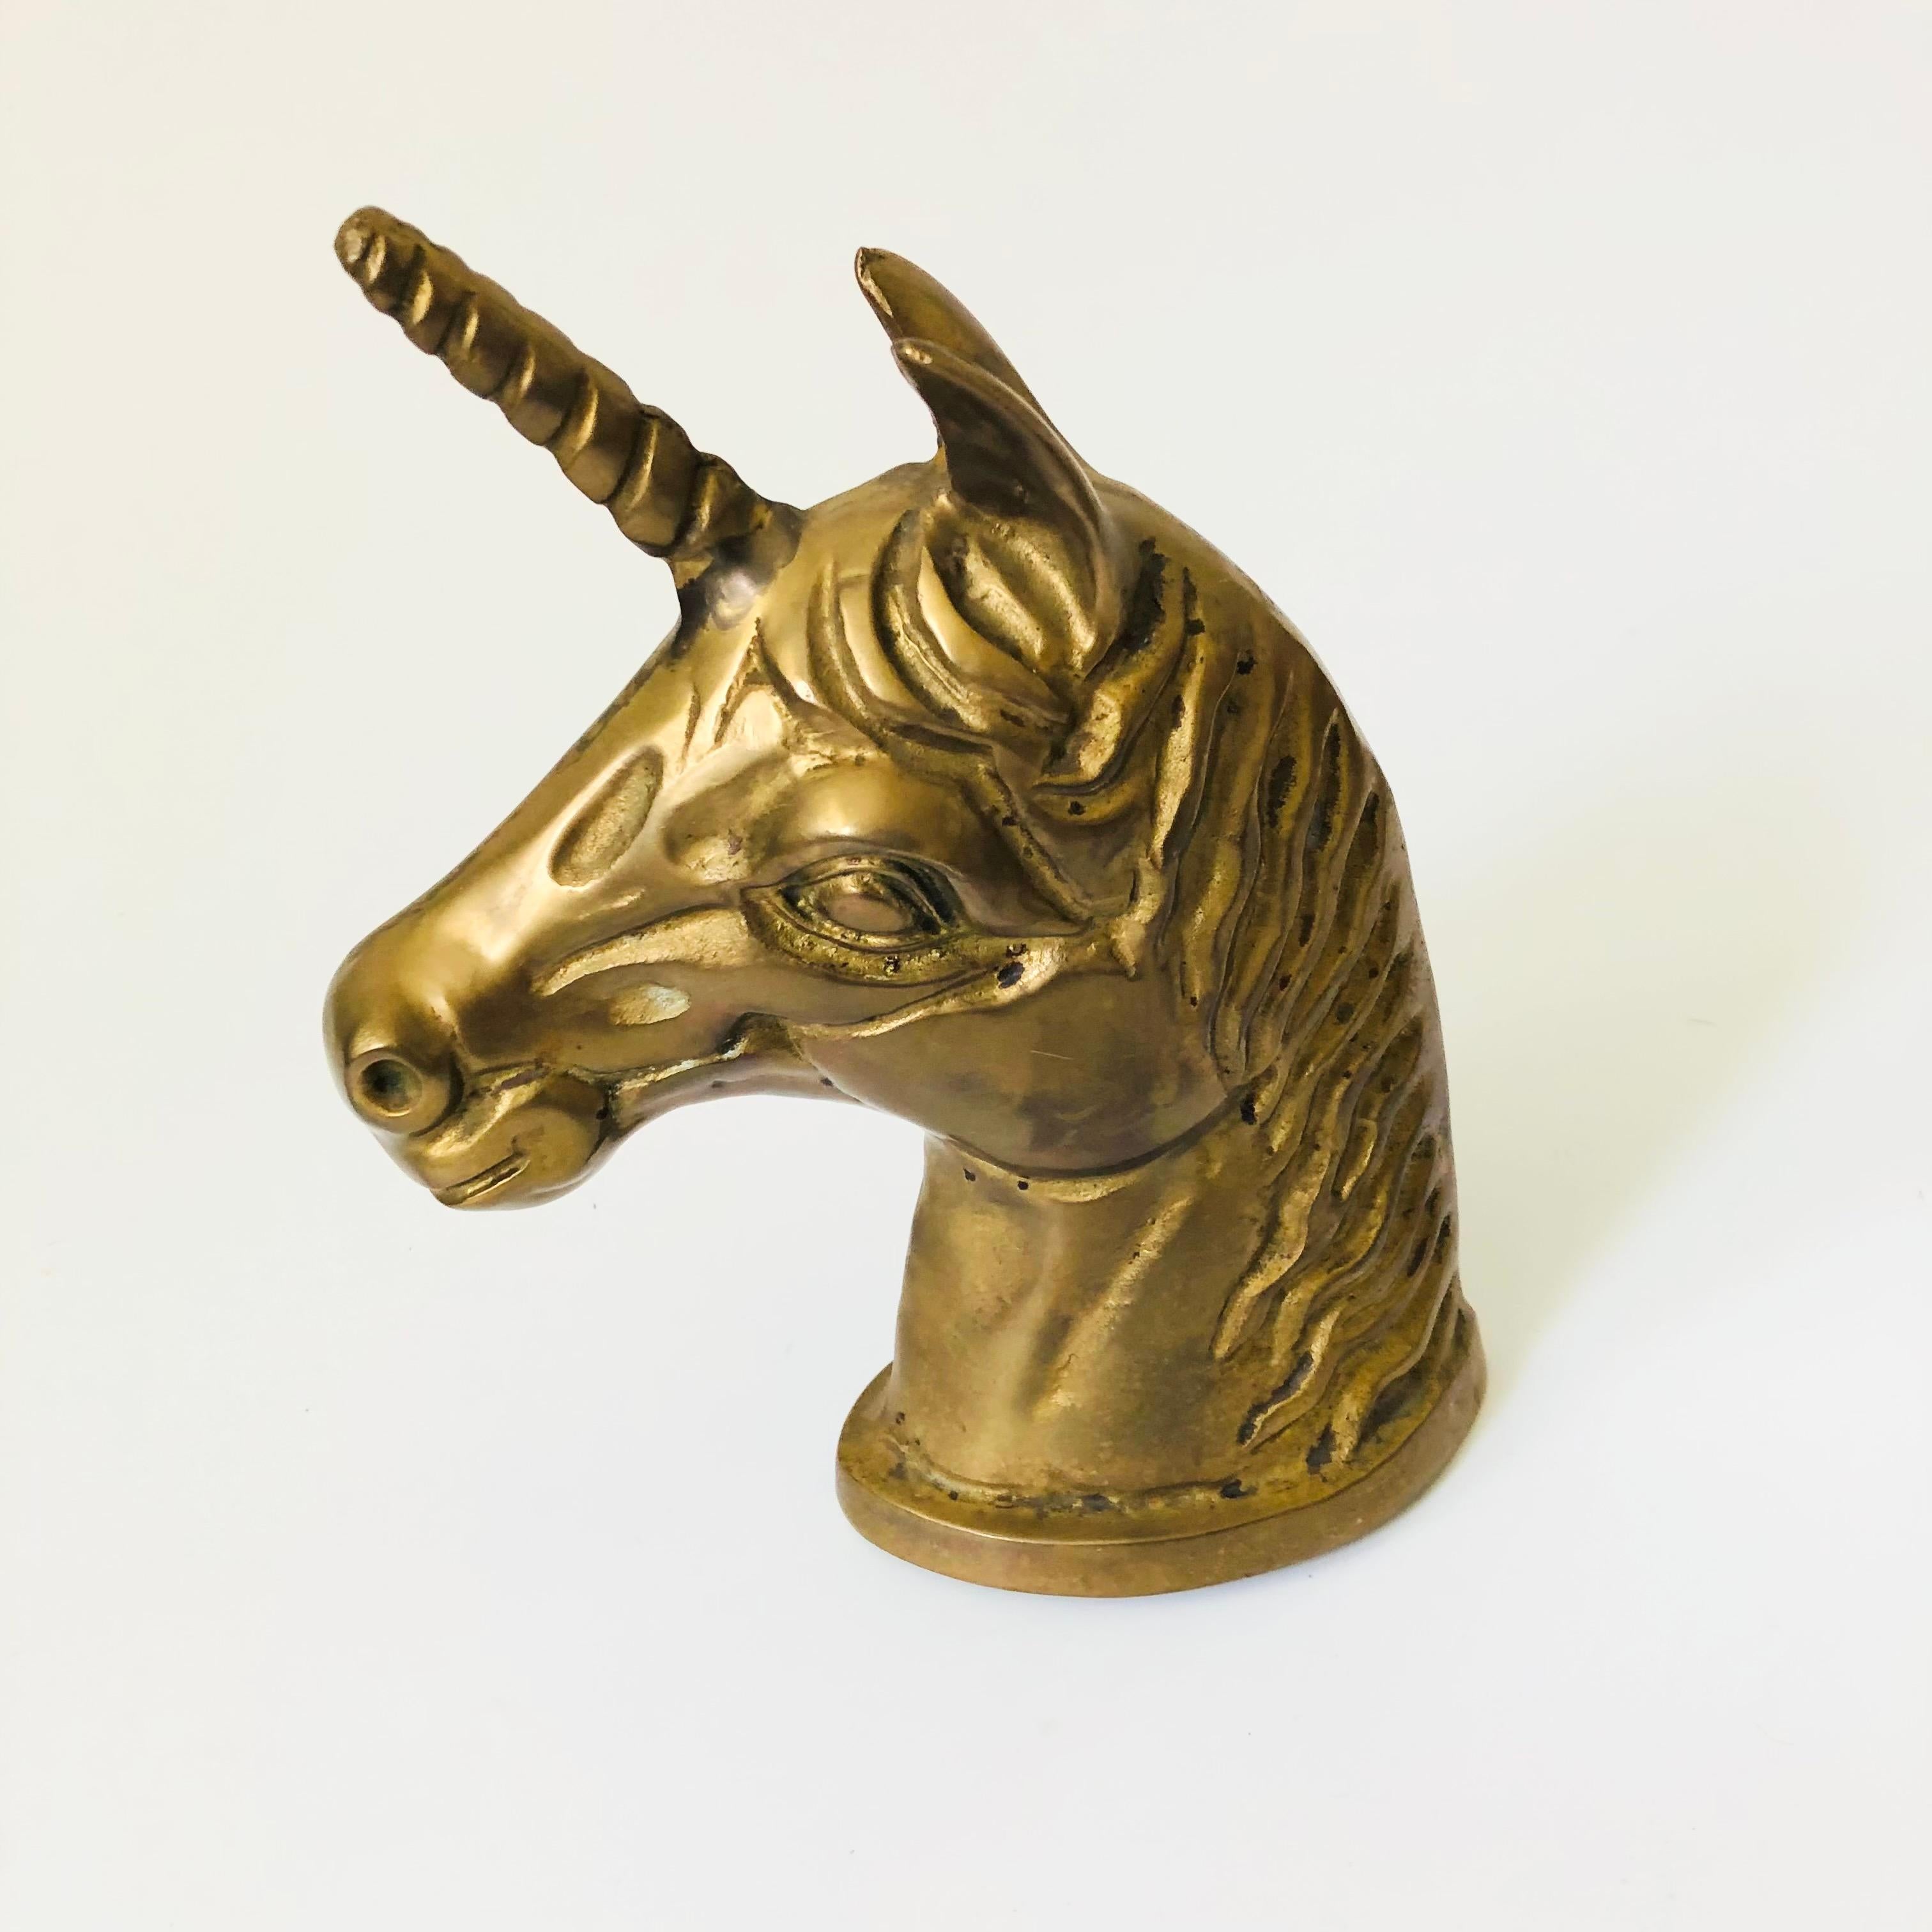 A large vintage brass unicorn head.

